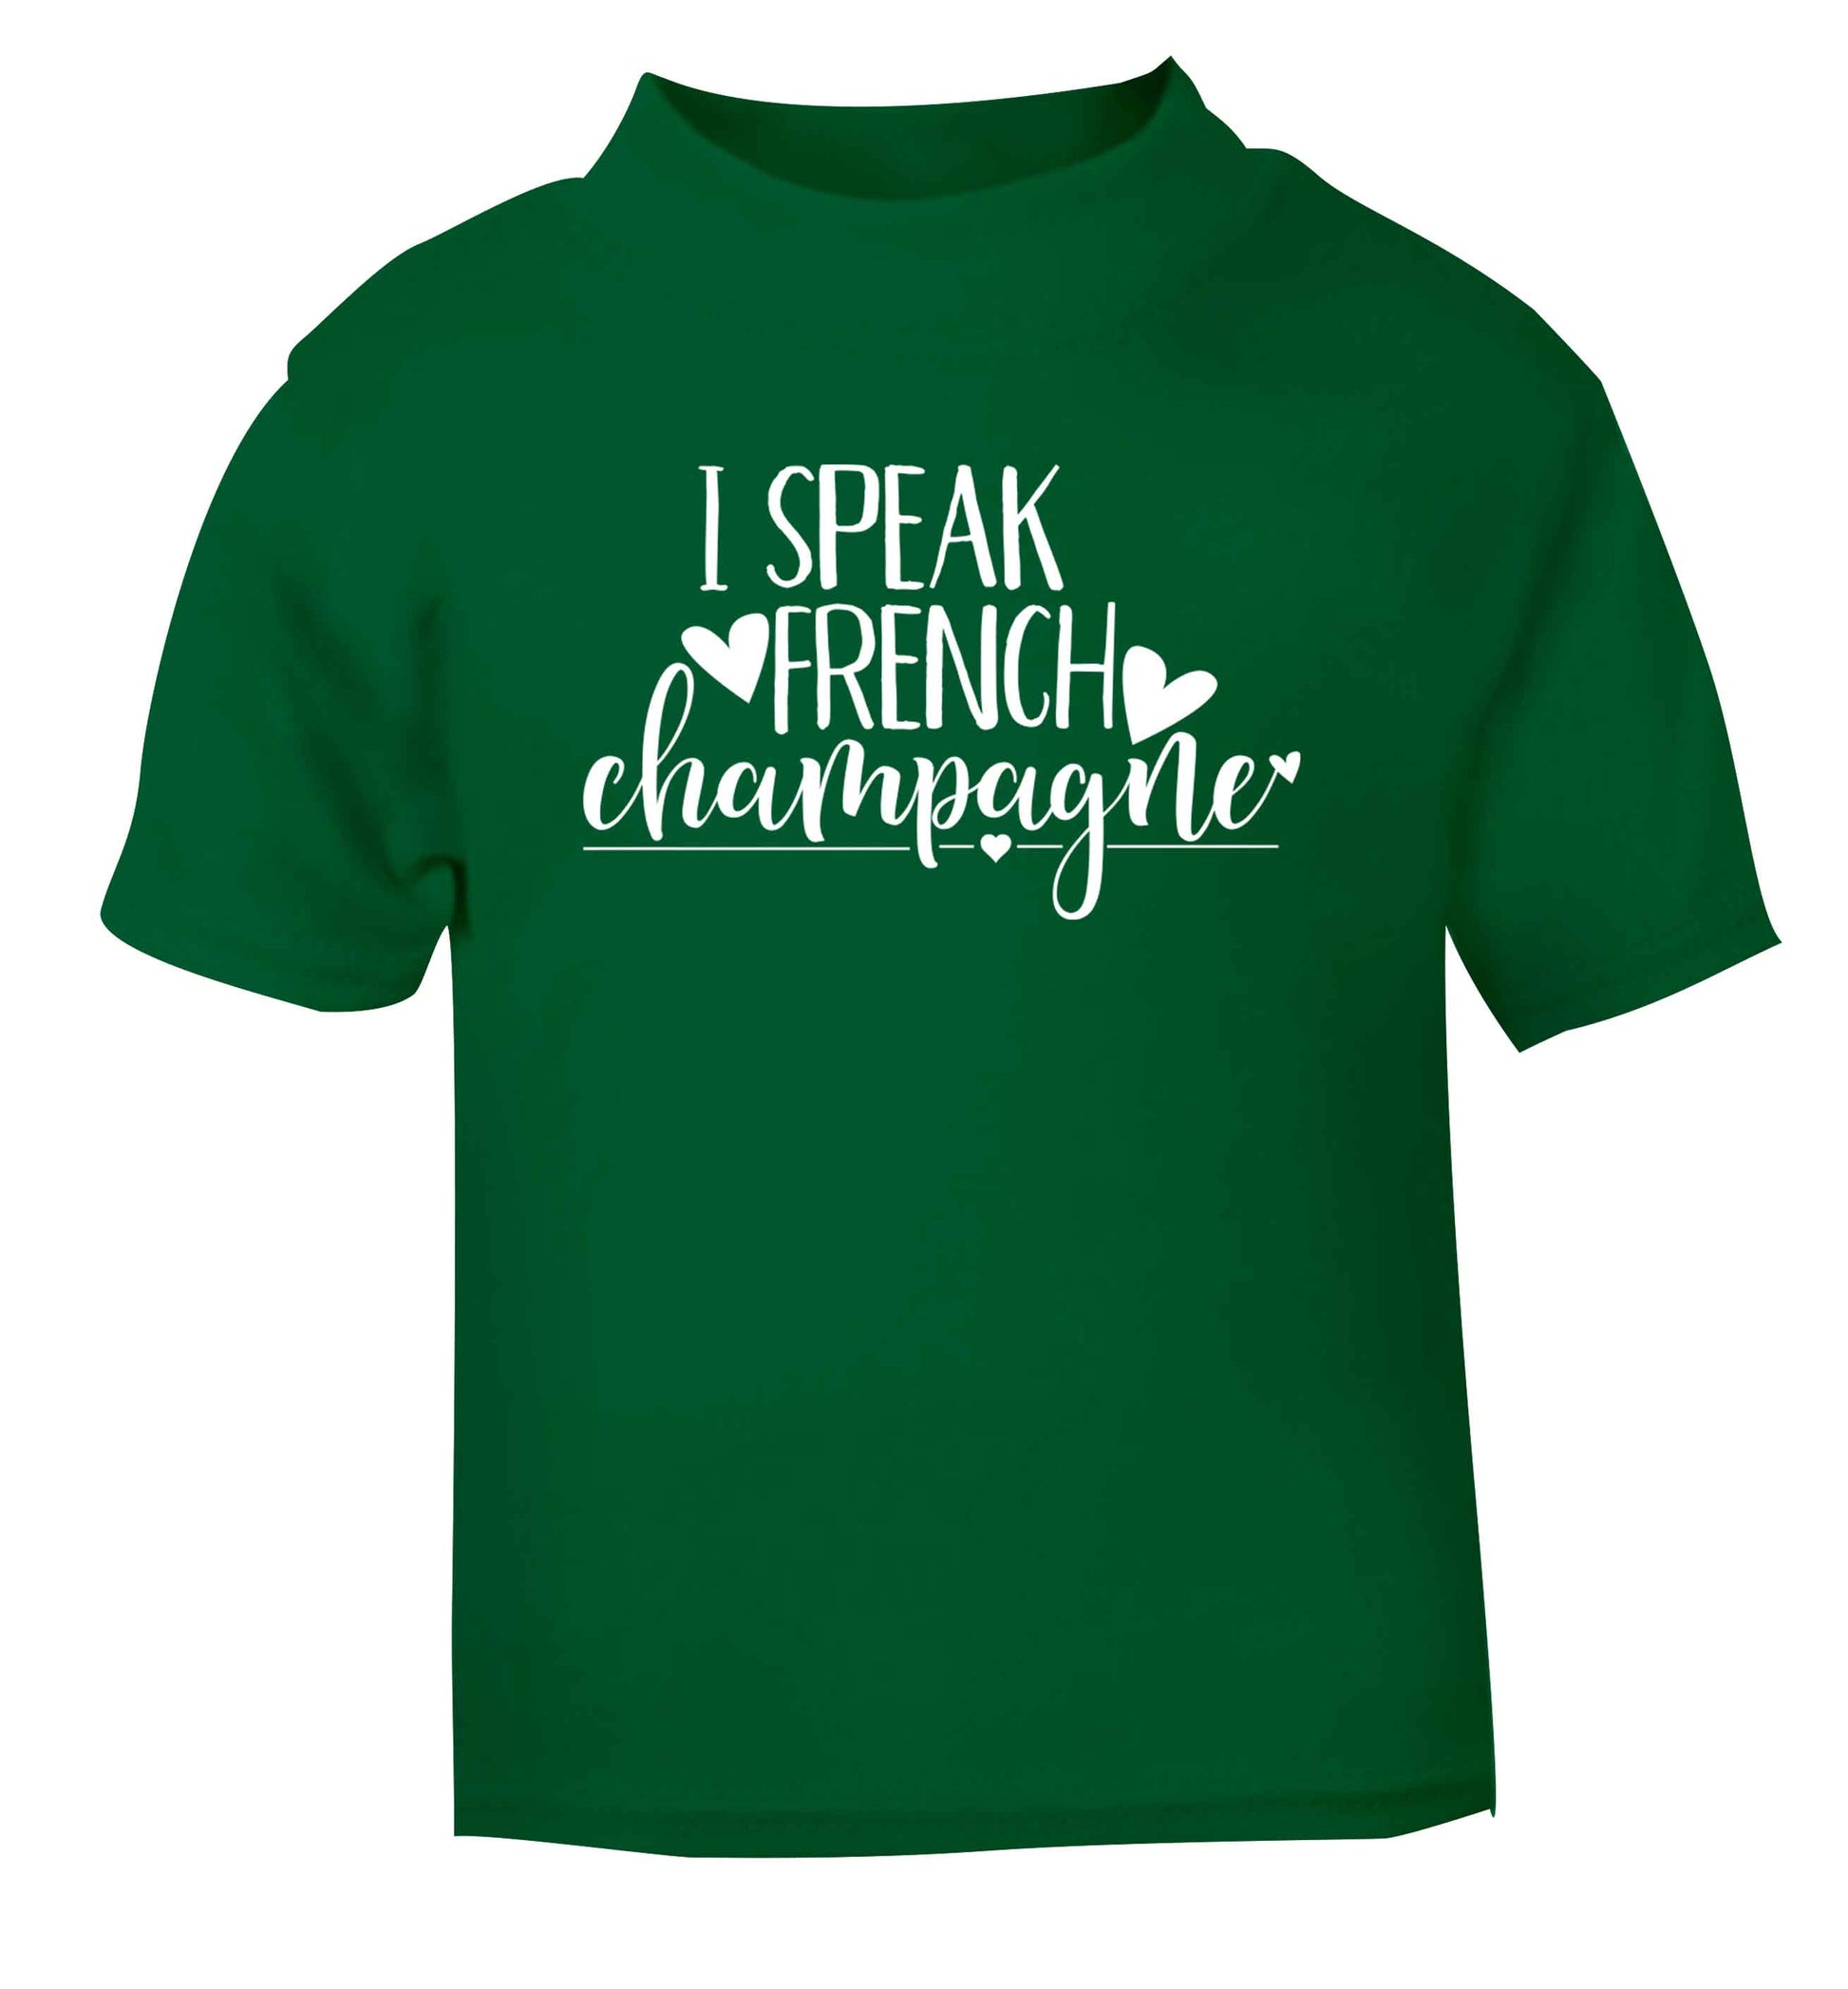 I speak french champagne green Baby Toddler Tshirt 2 Years